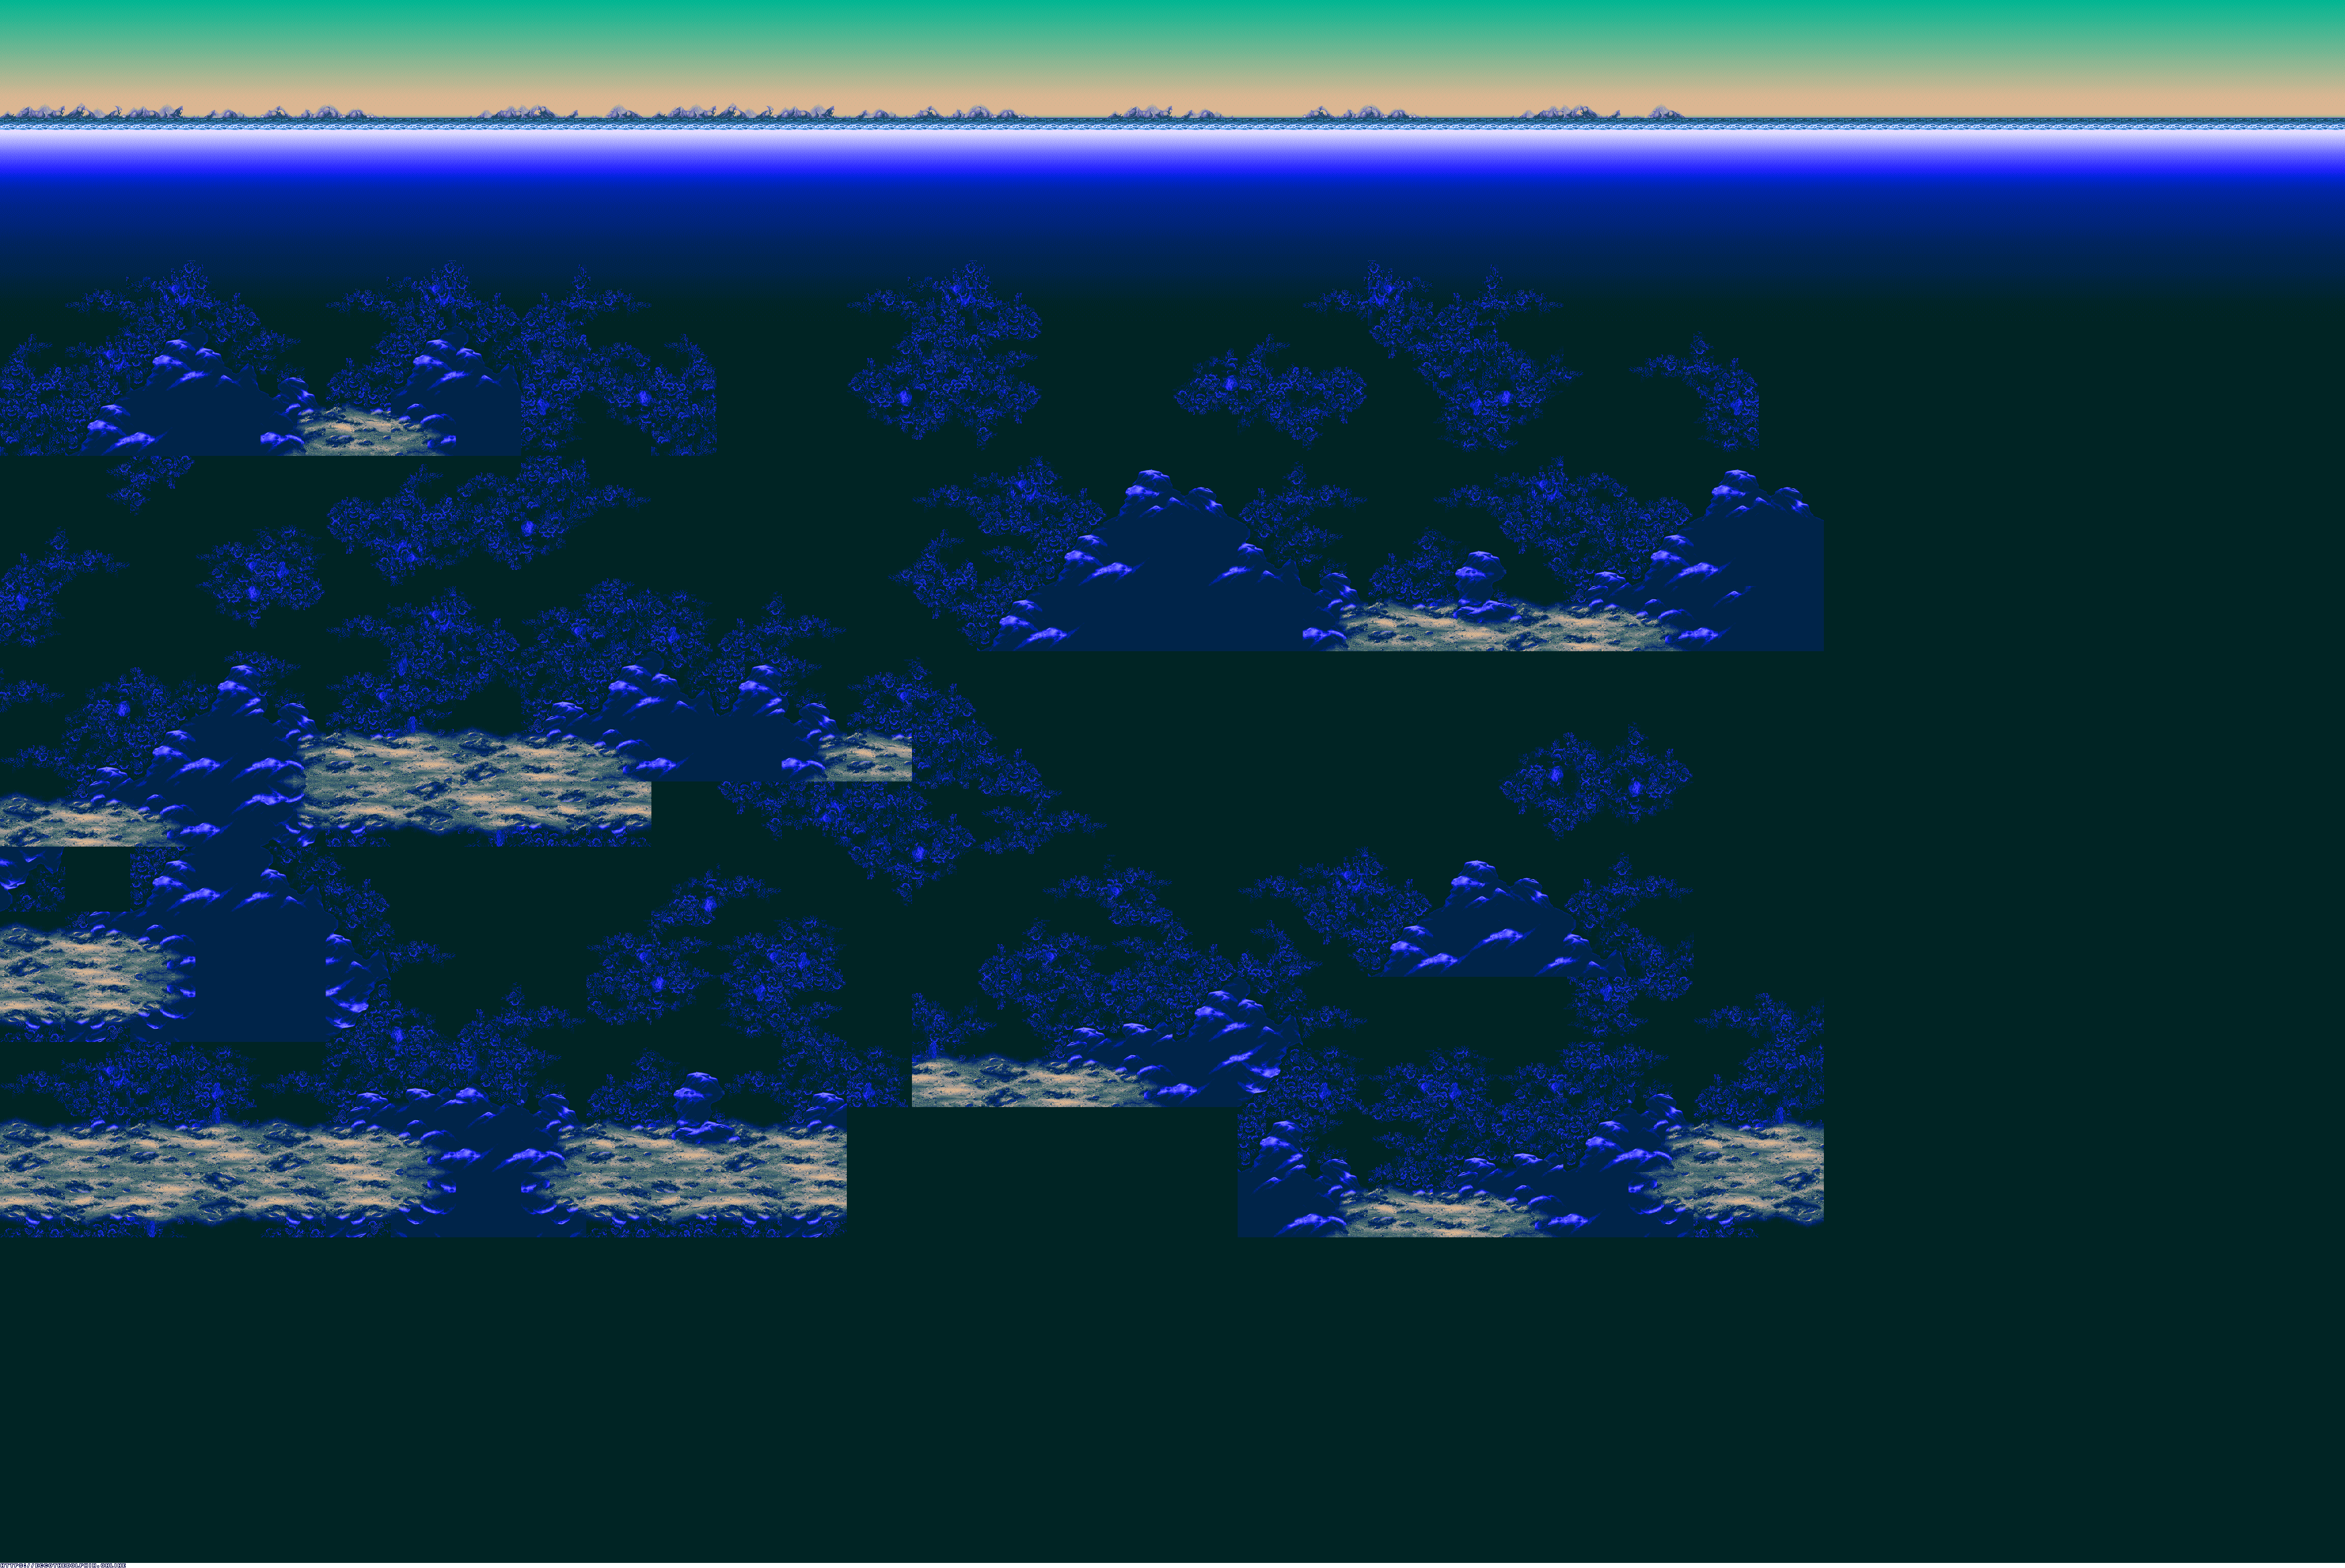 Lunar Bay (Background)